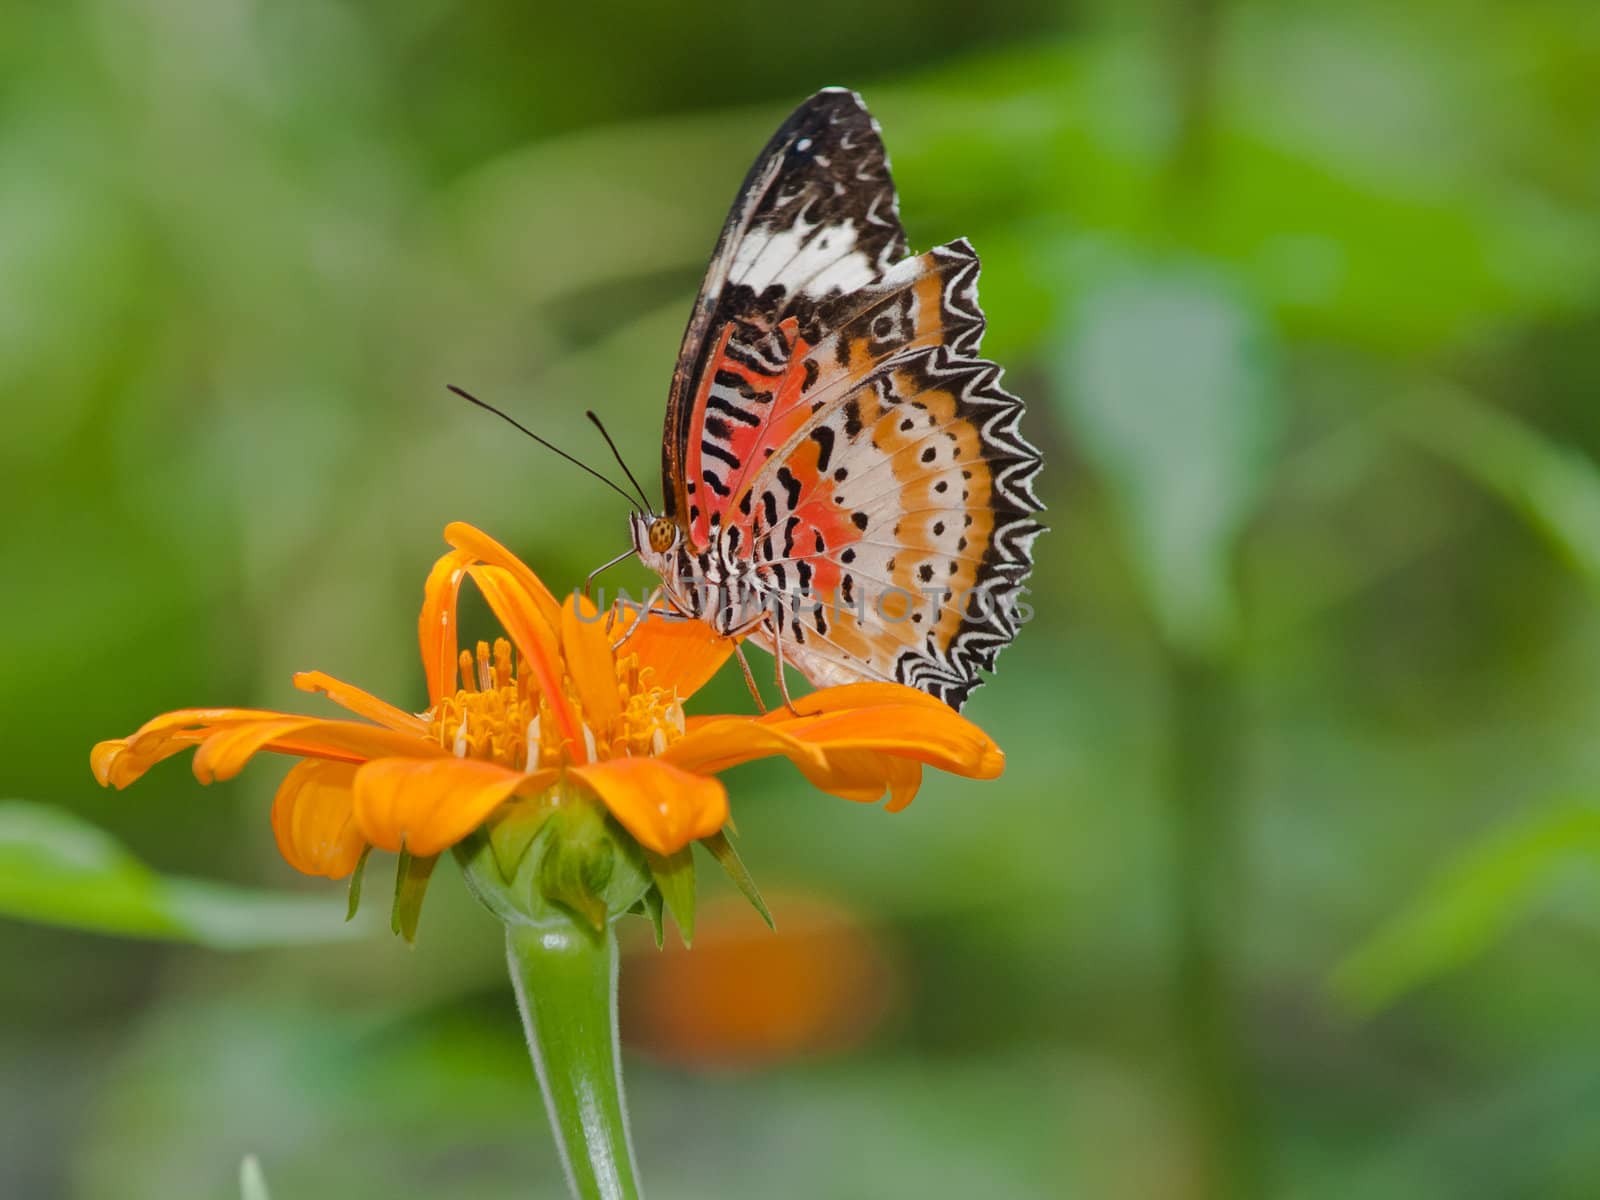 A beautiful butterfly sitting in the flower by jakgree